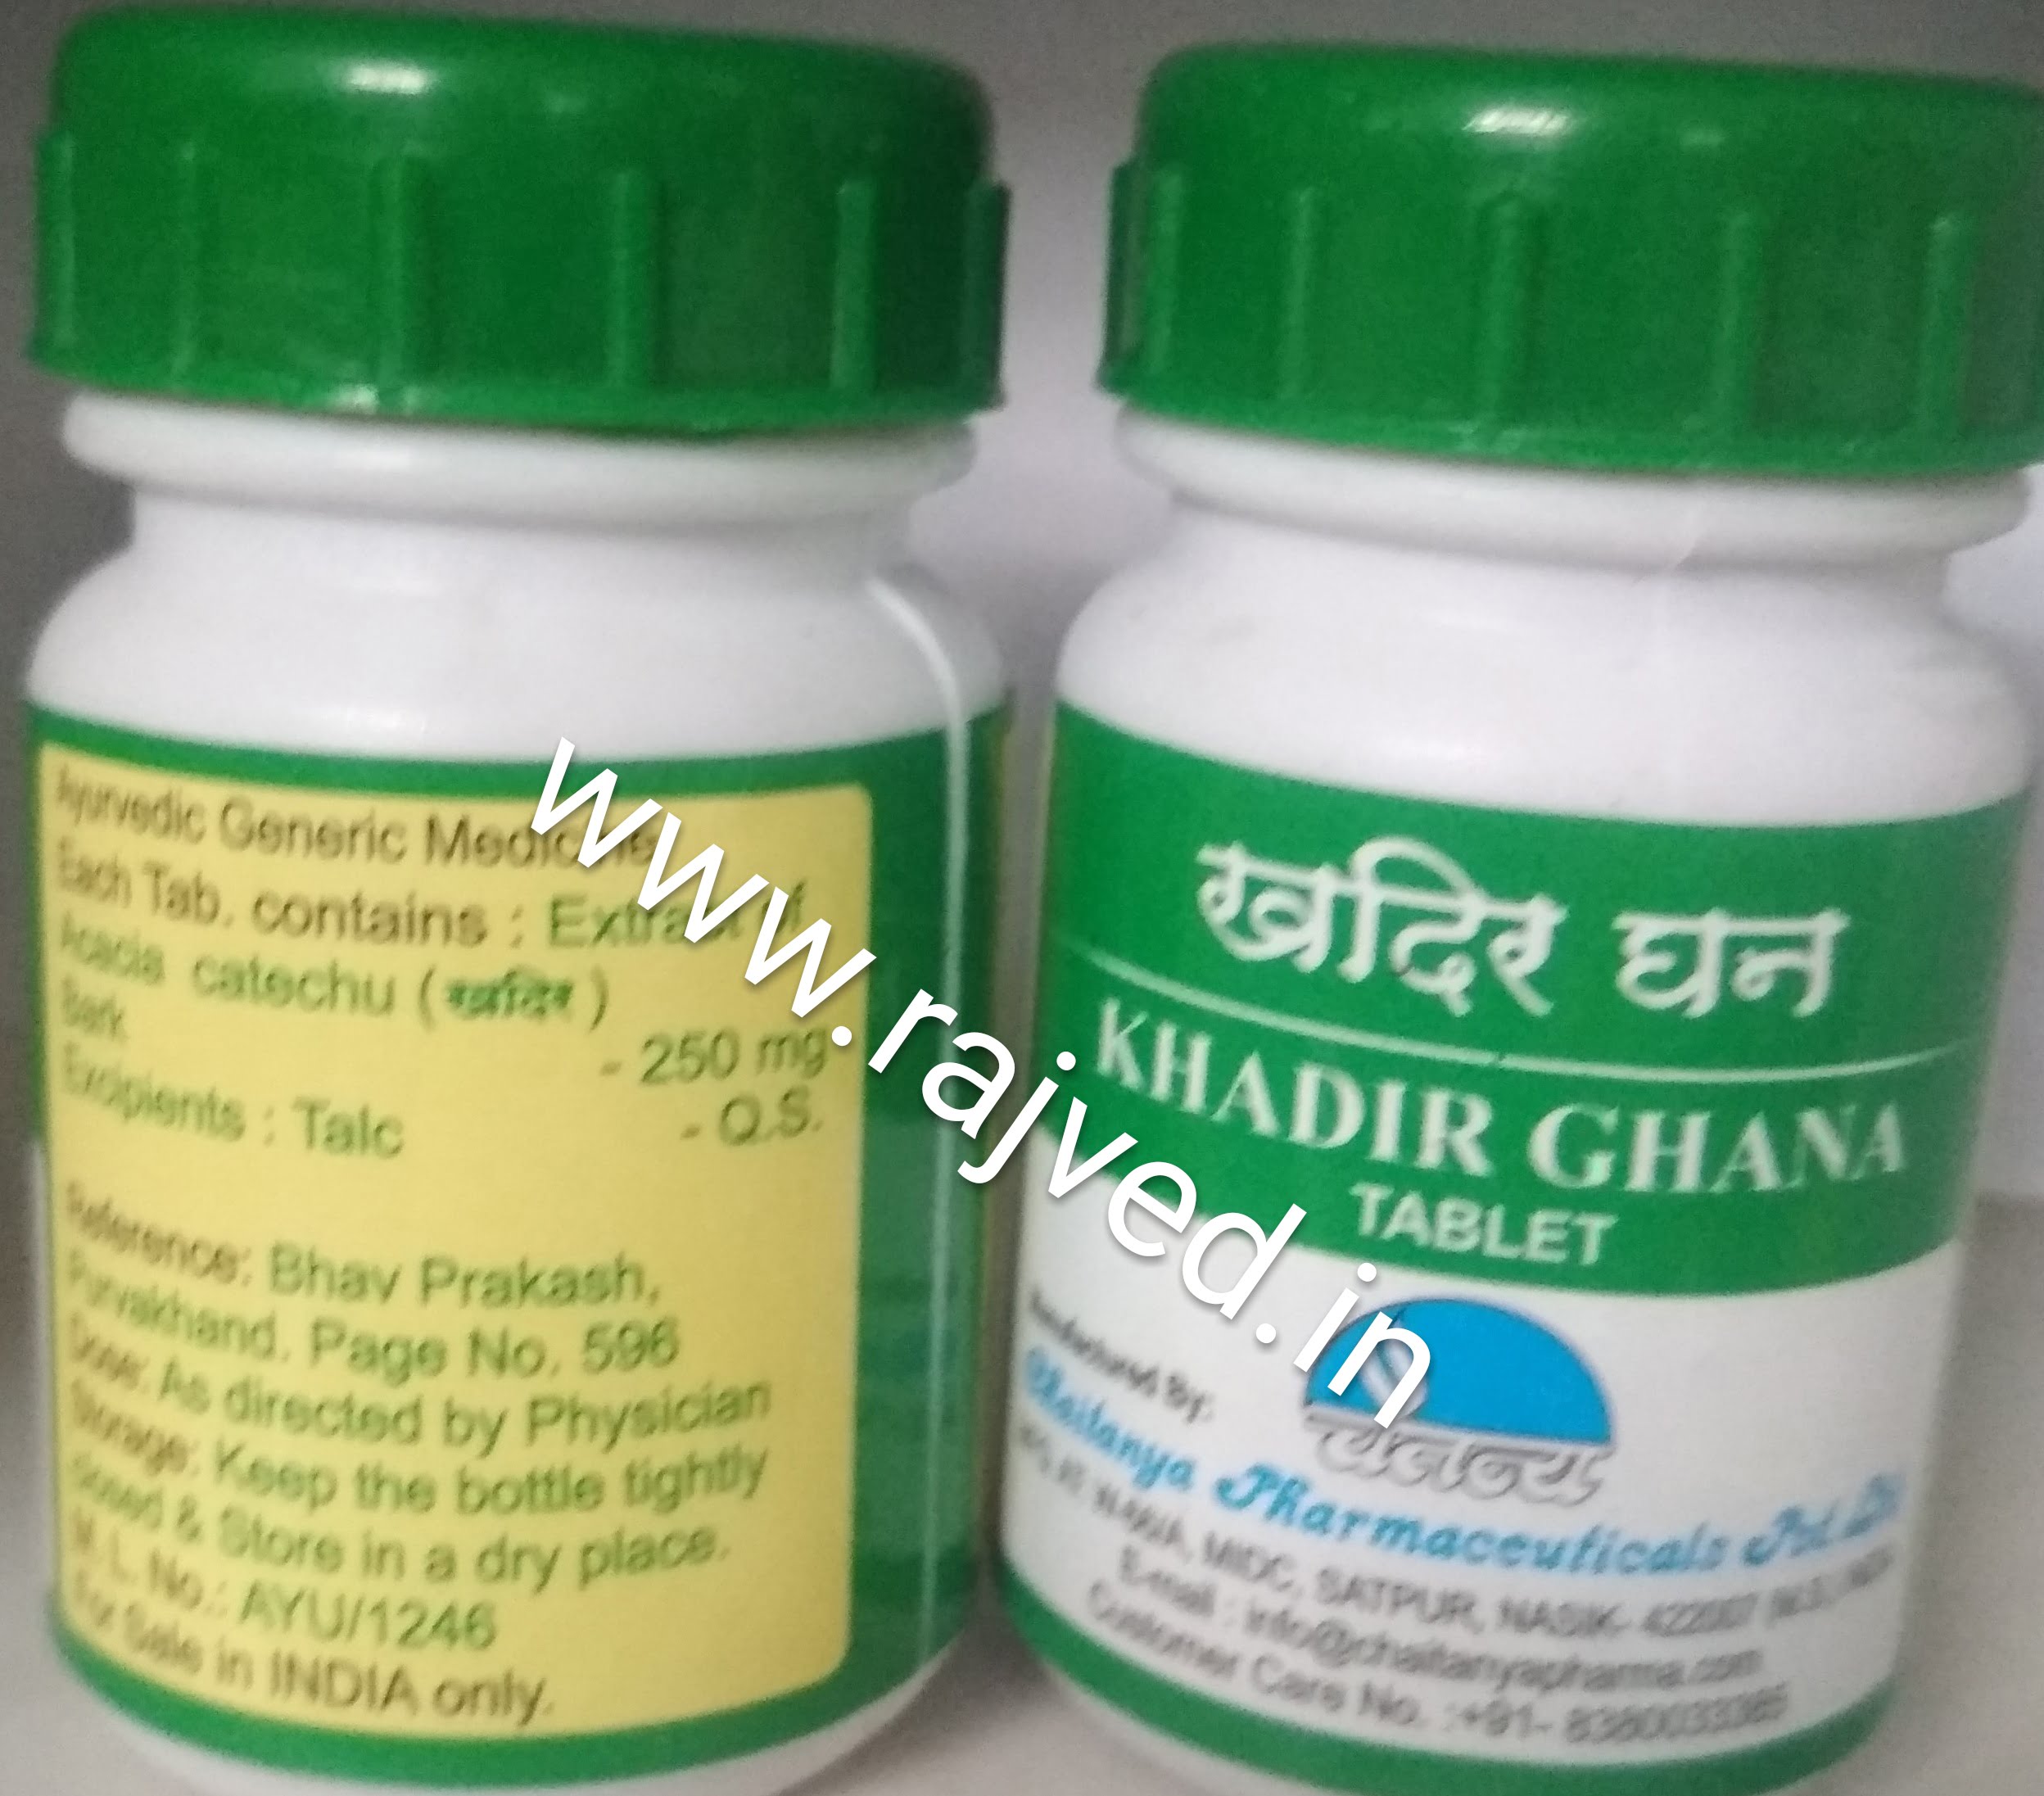 Khadir ghana 60tab chaitanya pharmaceuticals upto 20% off